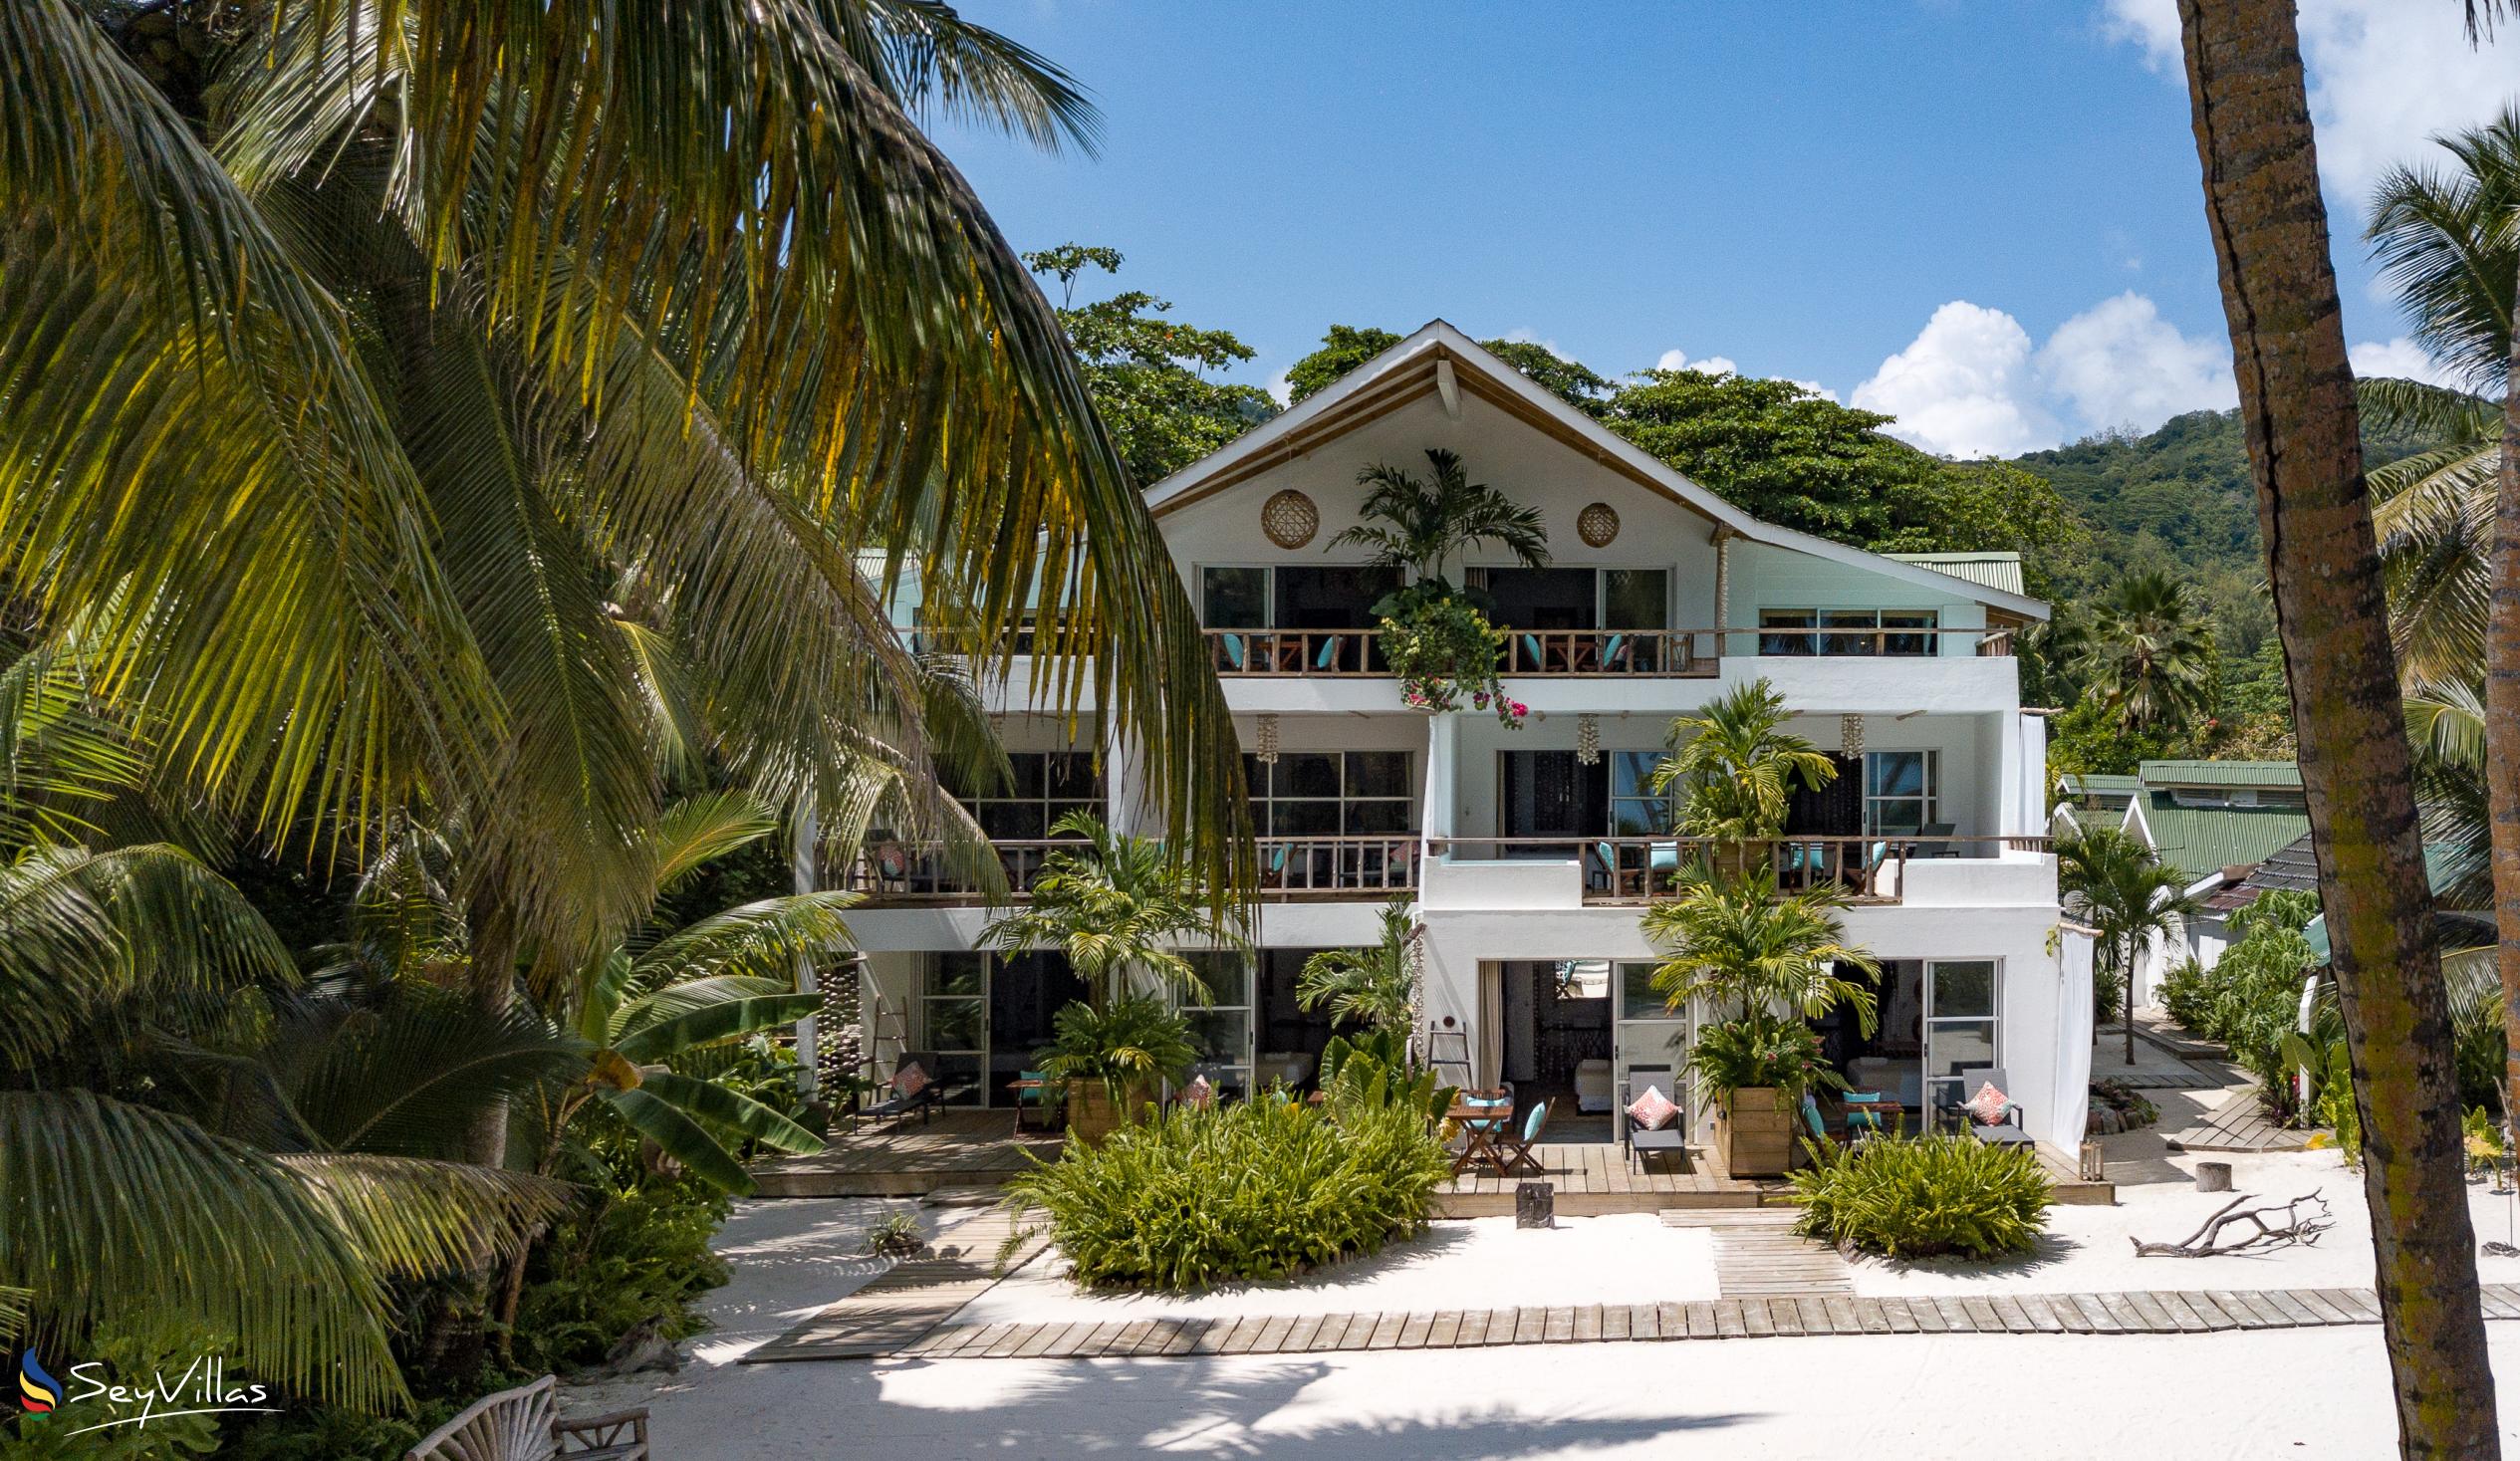 Foto 92: Bliss Hotel Praslin - Beach House - Camera Beach Garden Room - Praslin (Seychelles)